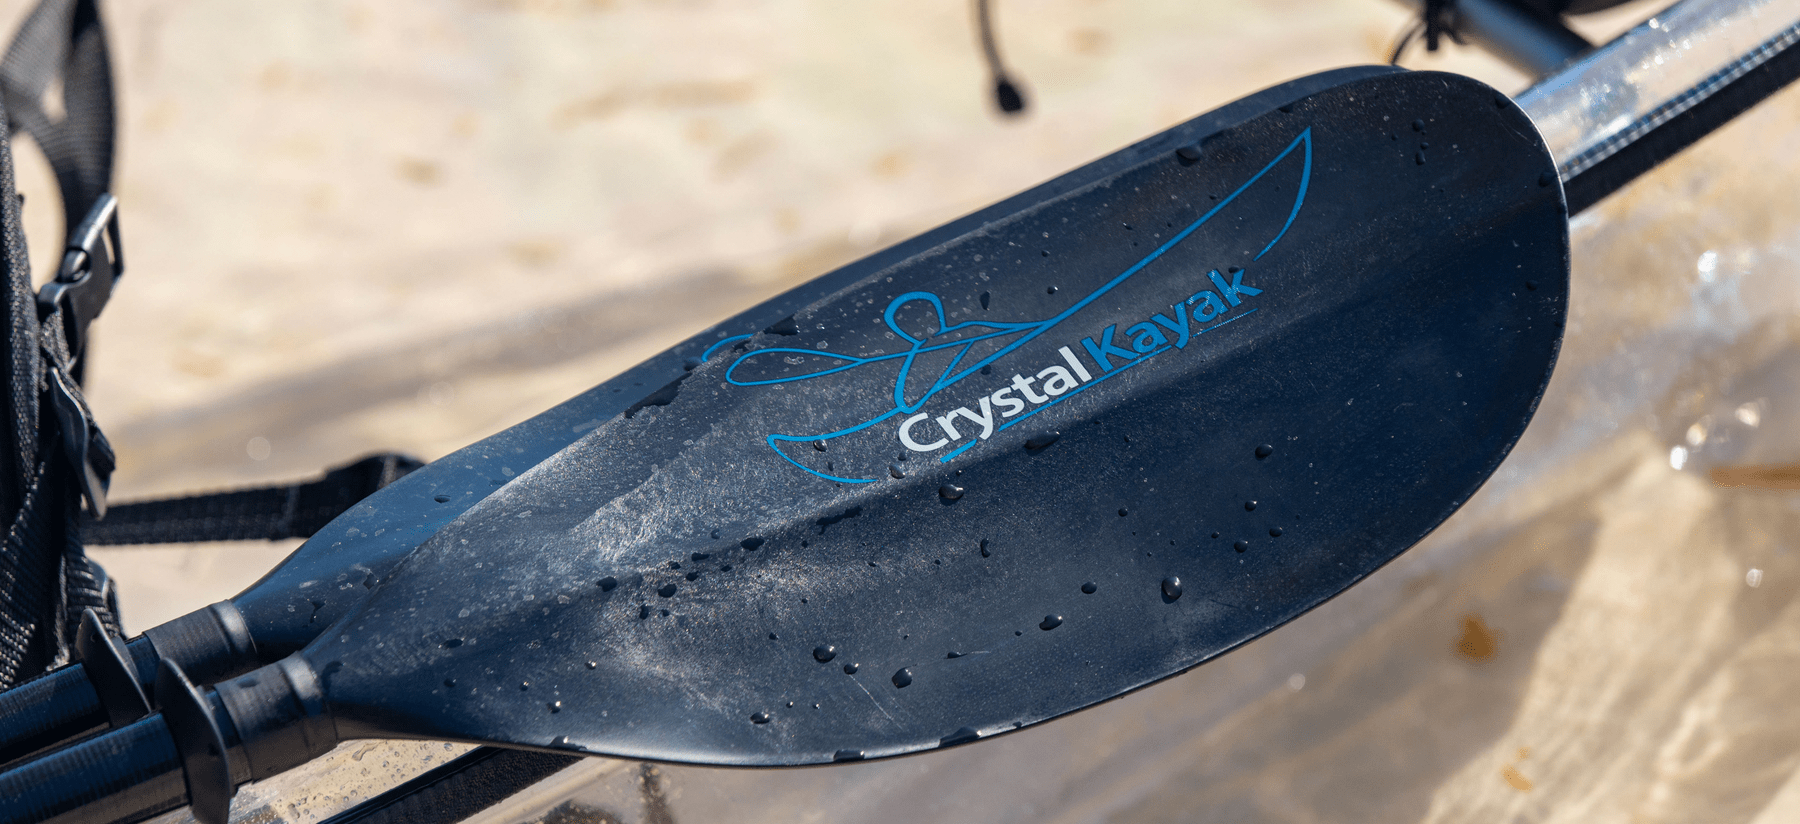 Crystal Kayaks Kayak Crystal Explorer Kayak - 11' 1" Clear Lexan™ Tandem Kayak